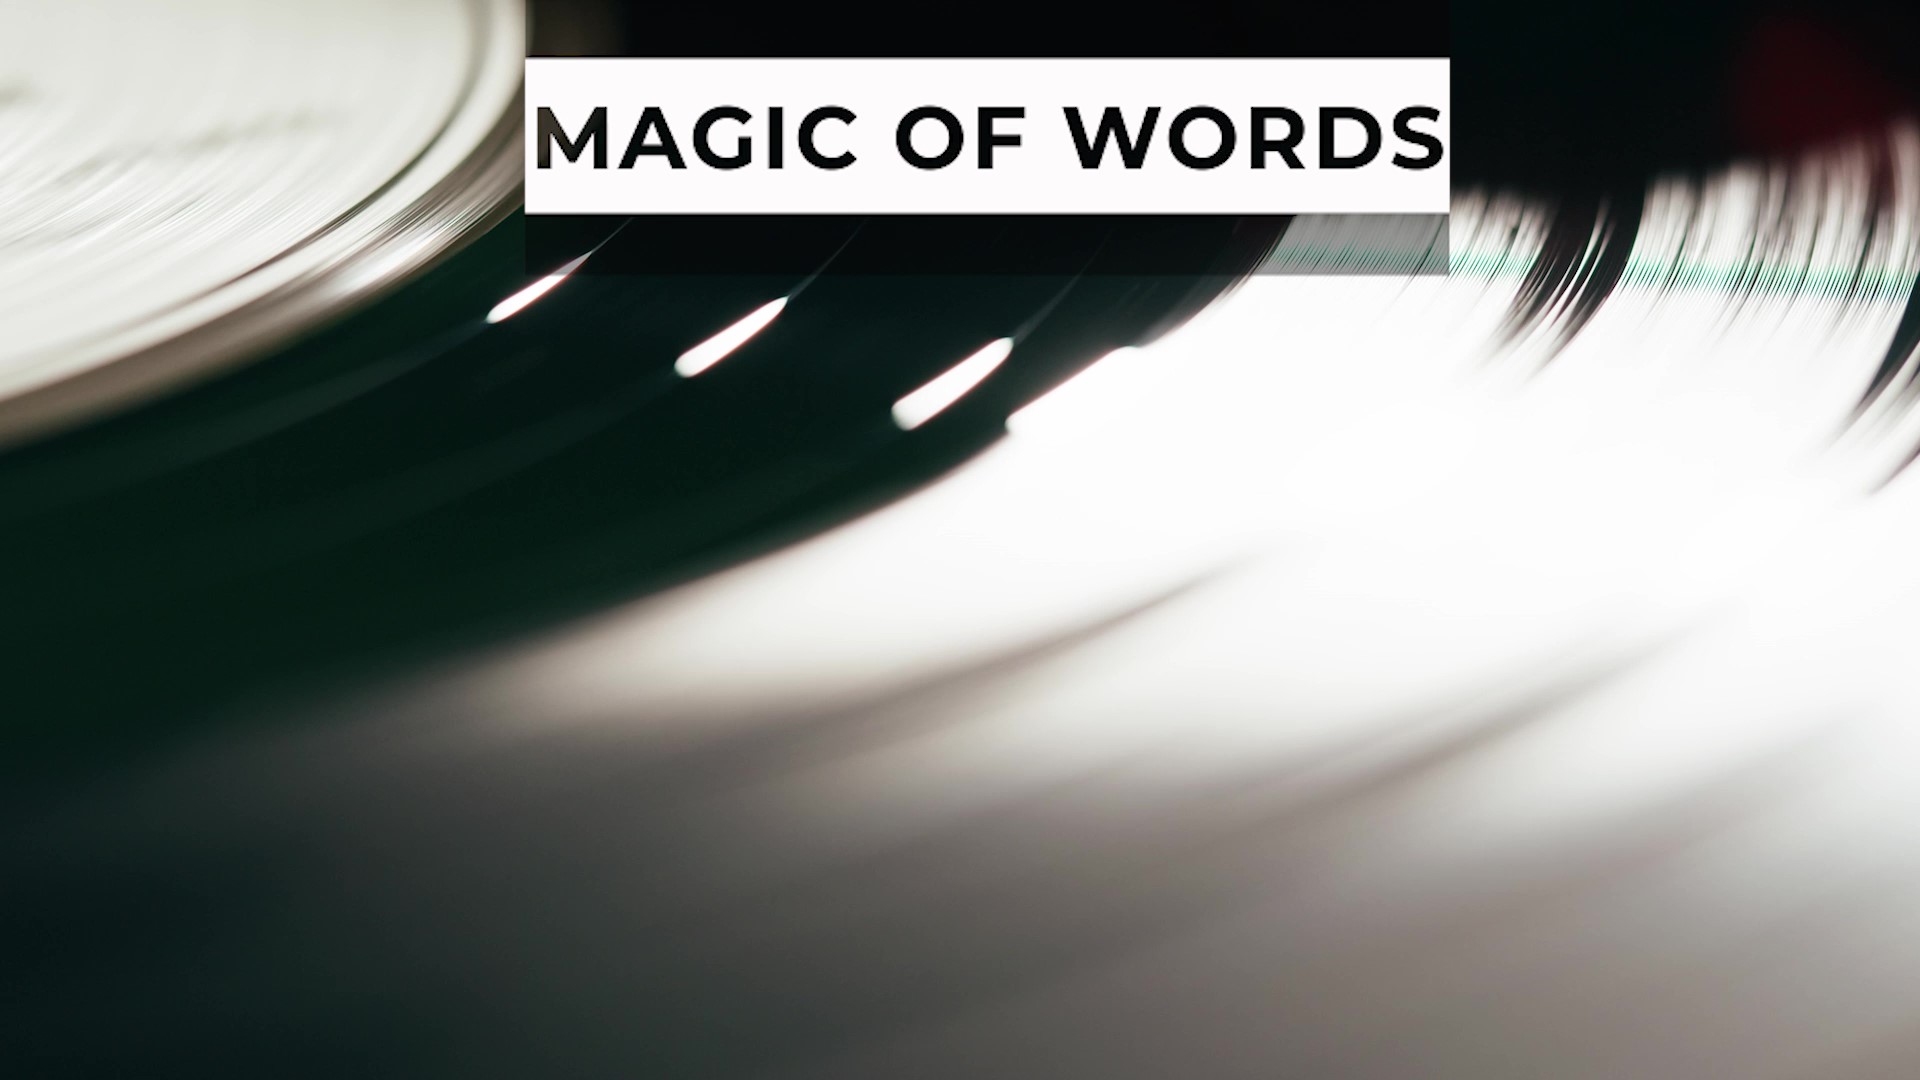 Magic of words